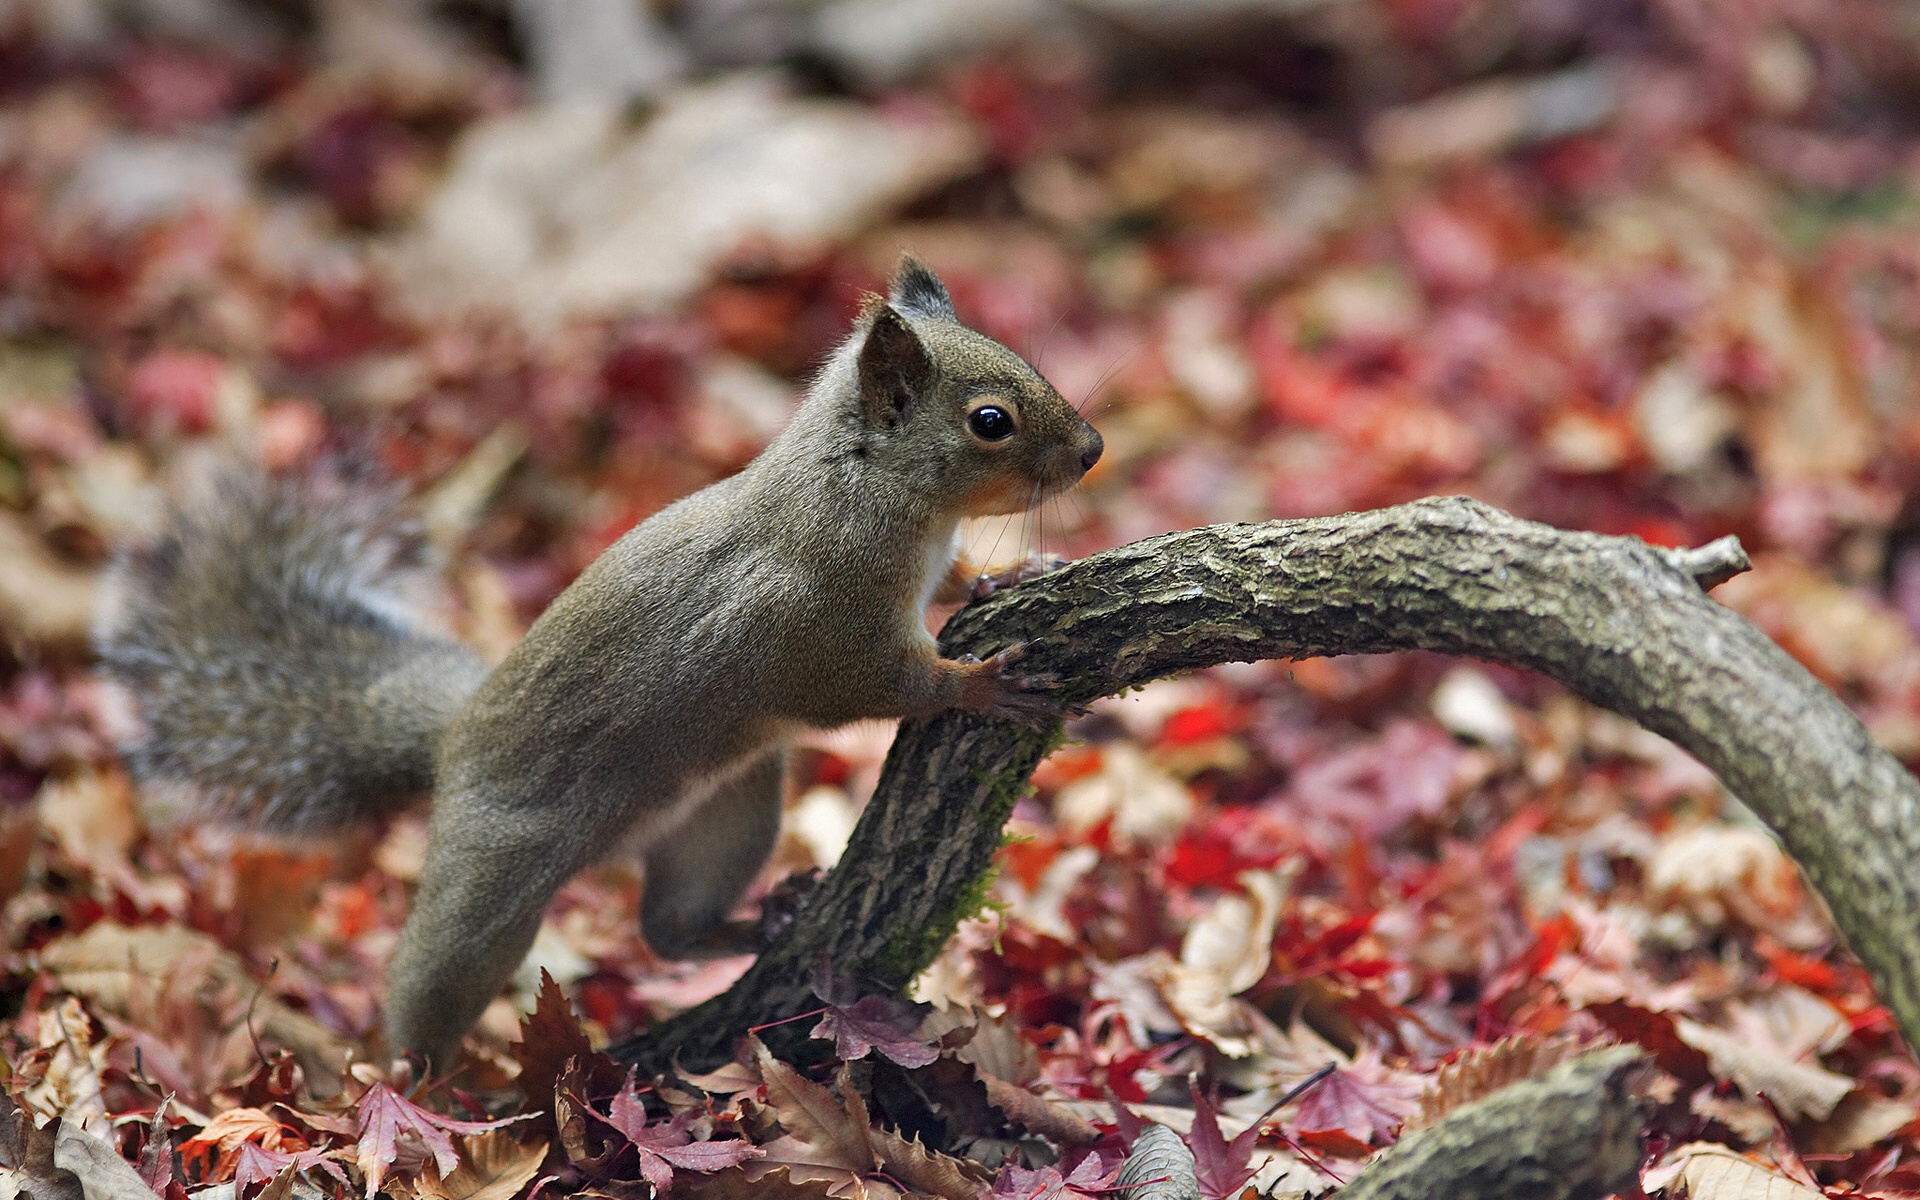 A Cute Little Squirrel